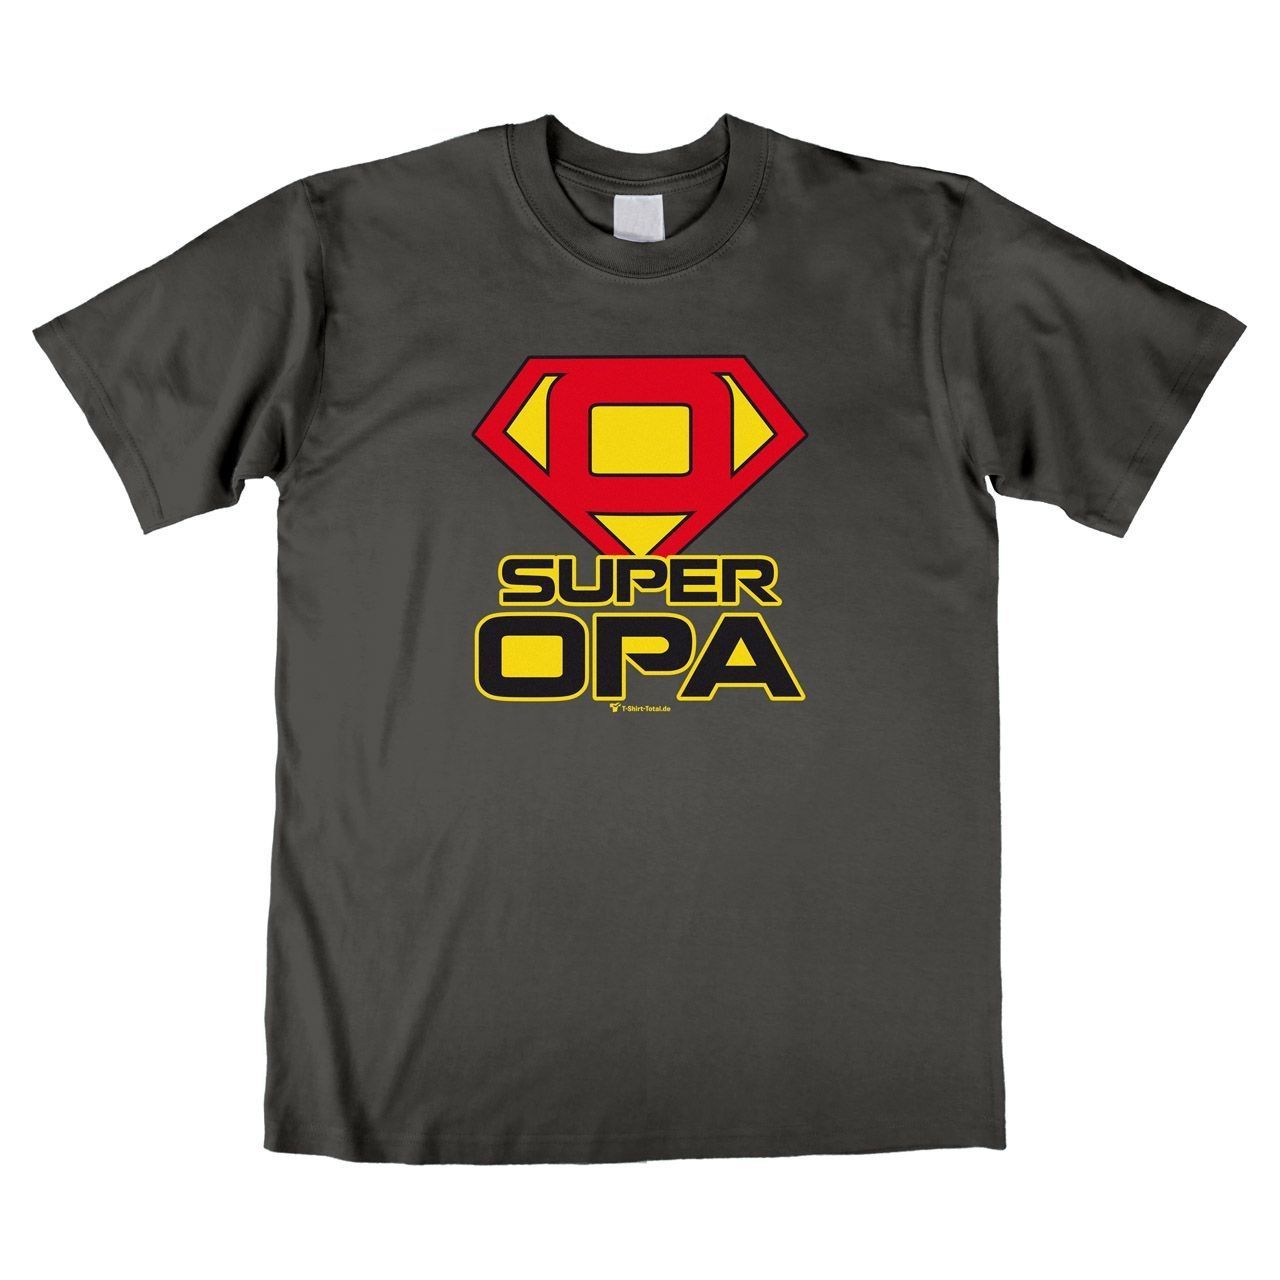 Super Opa Unisex T-Shirt grau Large